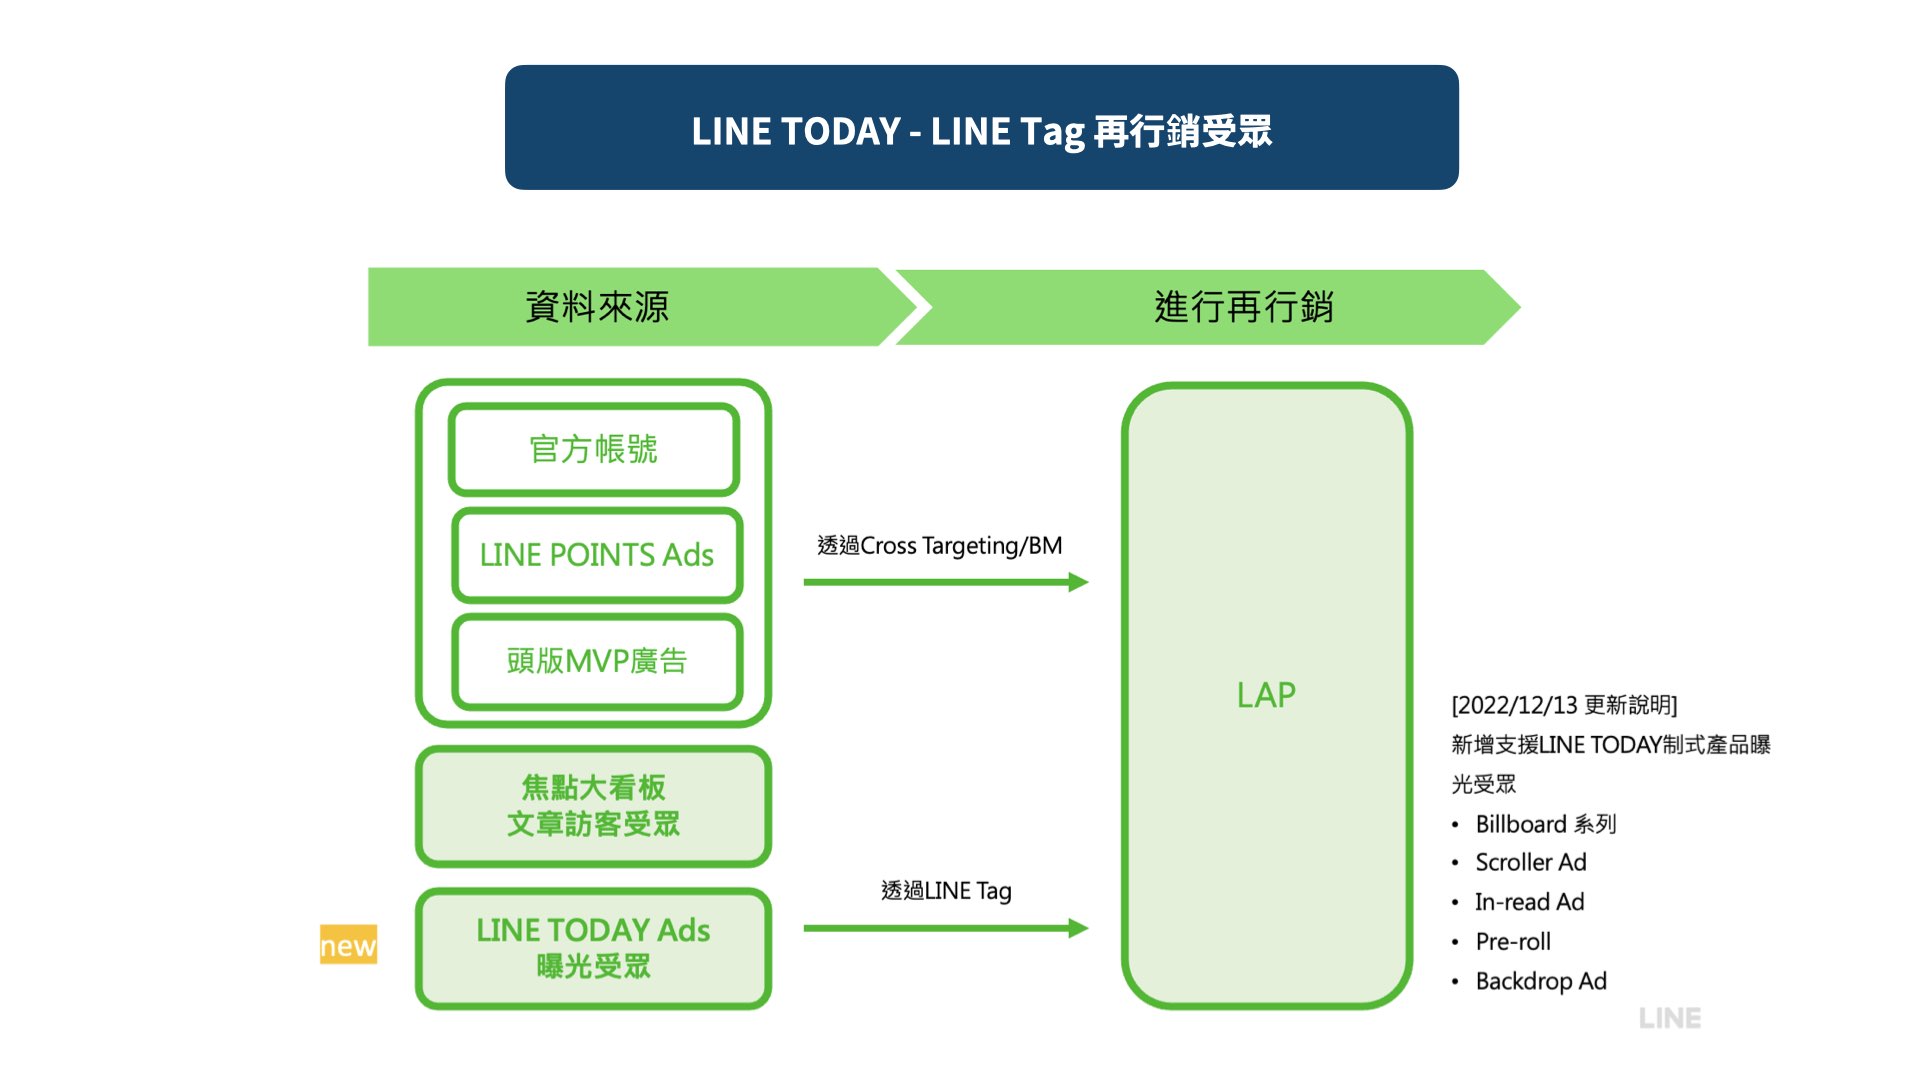 NEW! LINE TODAY Ads 曝光受眾 - LAP再行銷功能